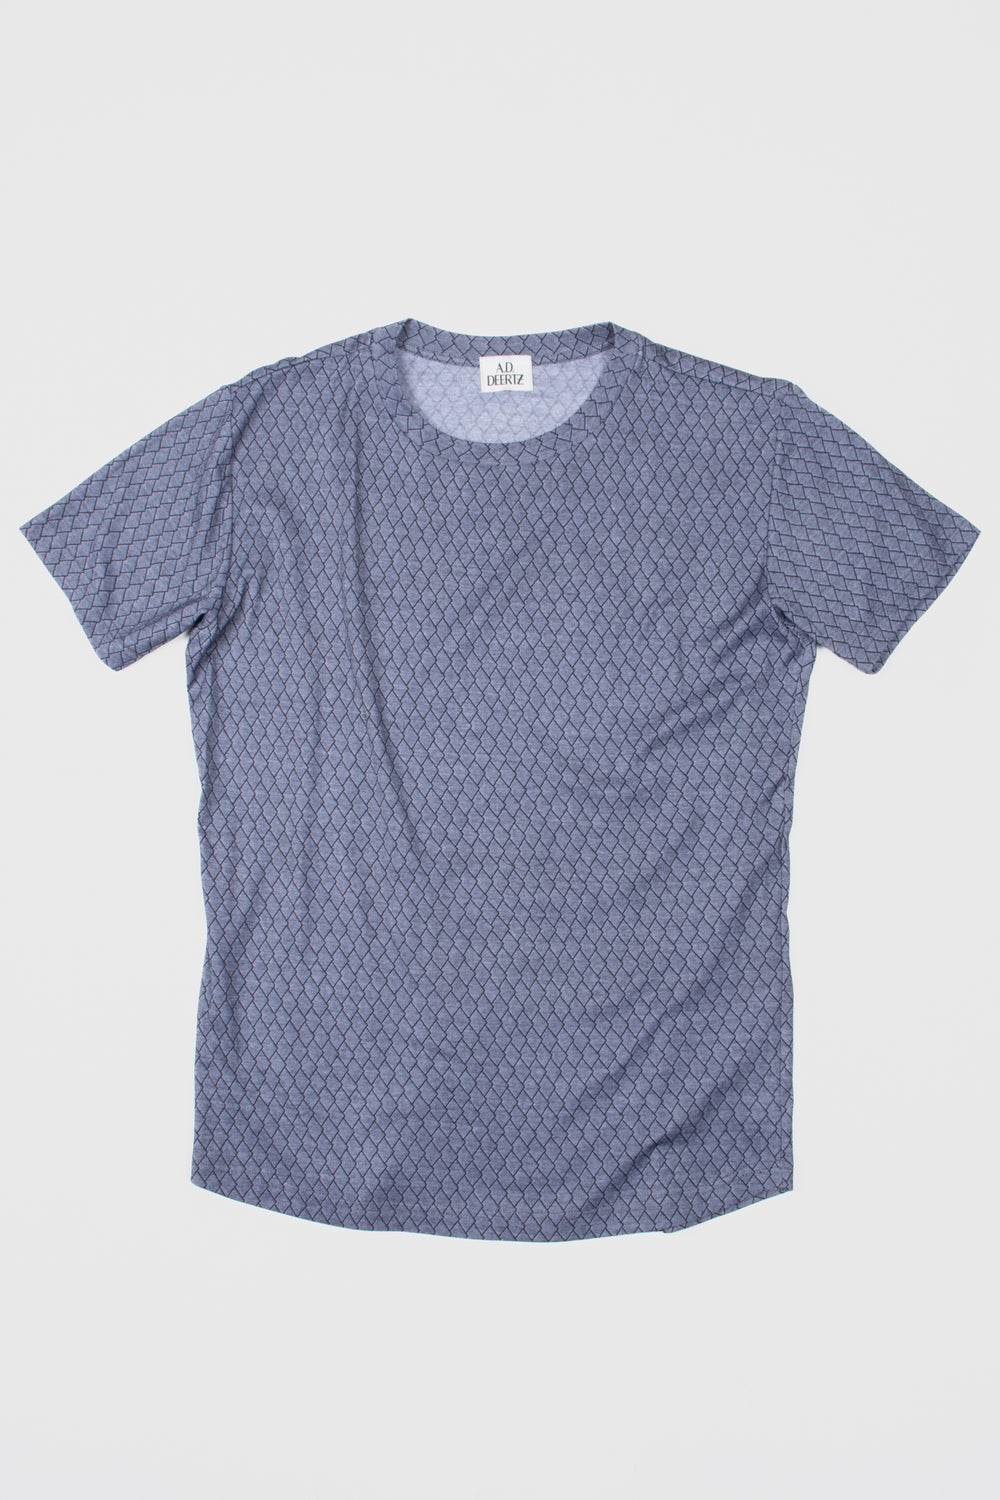 Cypress T-Shirt navy-grey